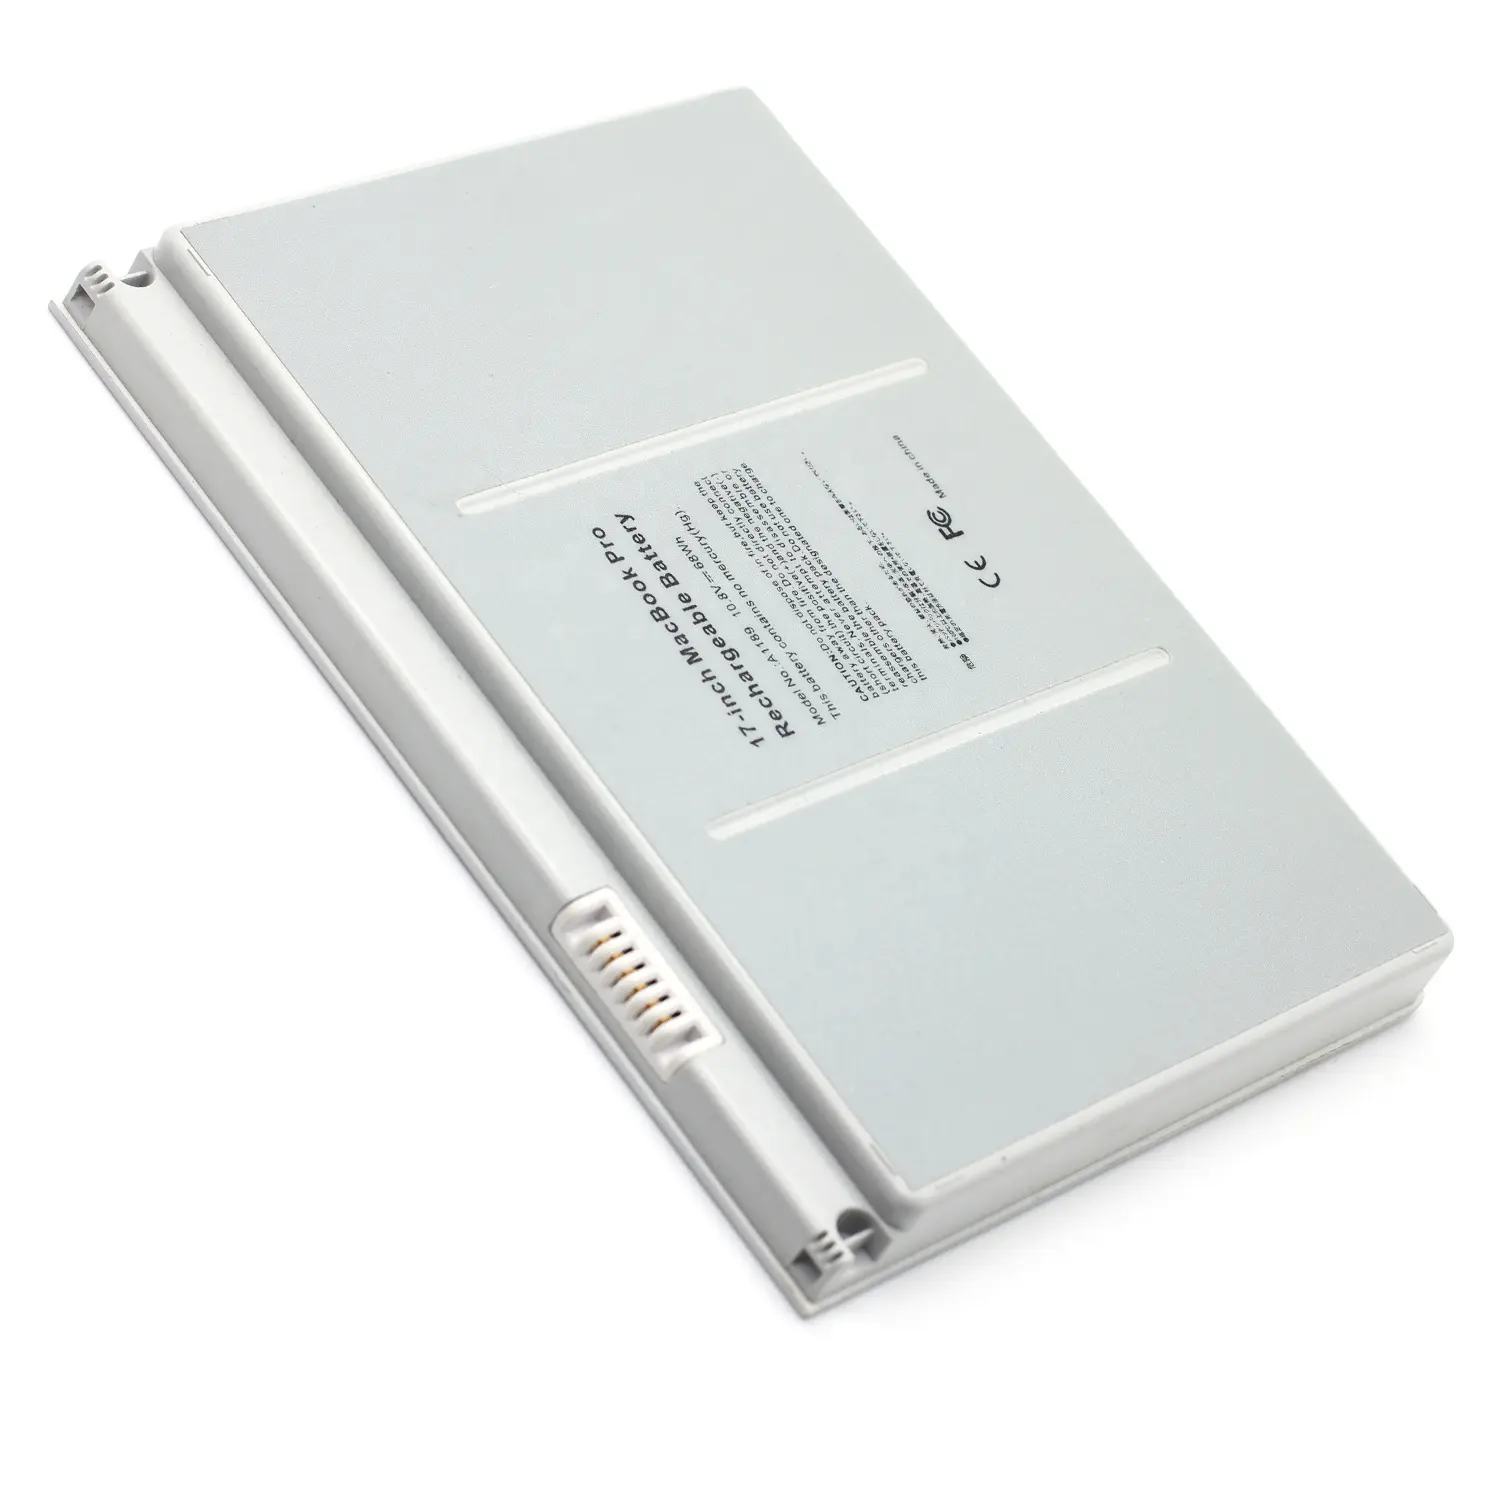 Kaliteli toptan 68wh Apple için batarya A1189 MacBook Pro 17 inç serisi (MA092CH/A)